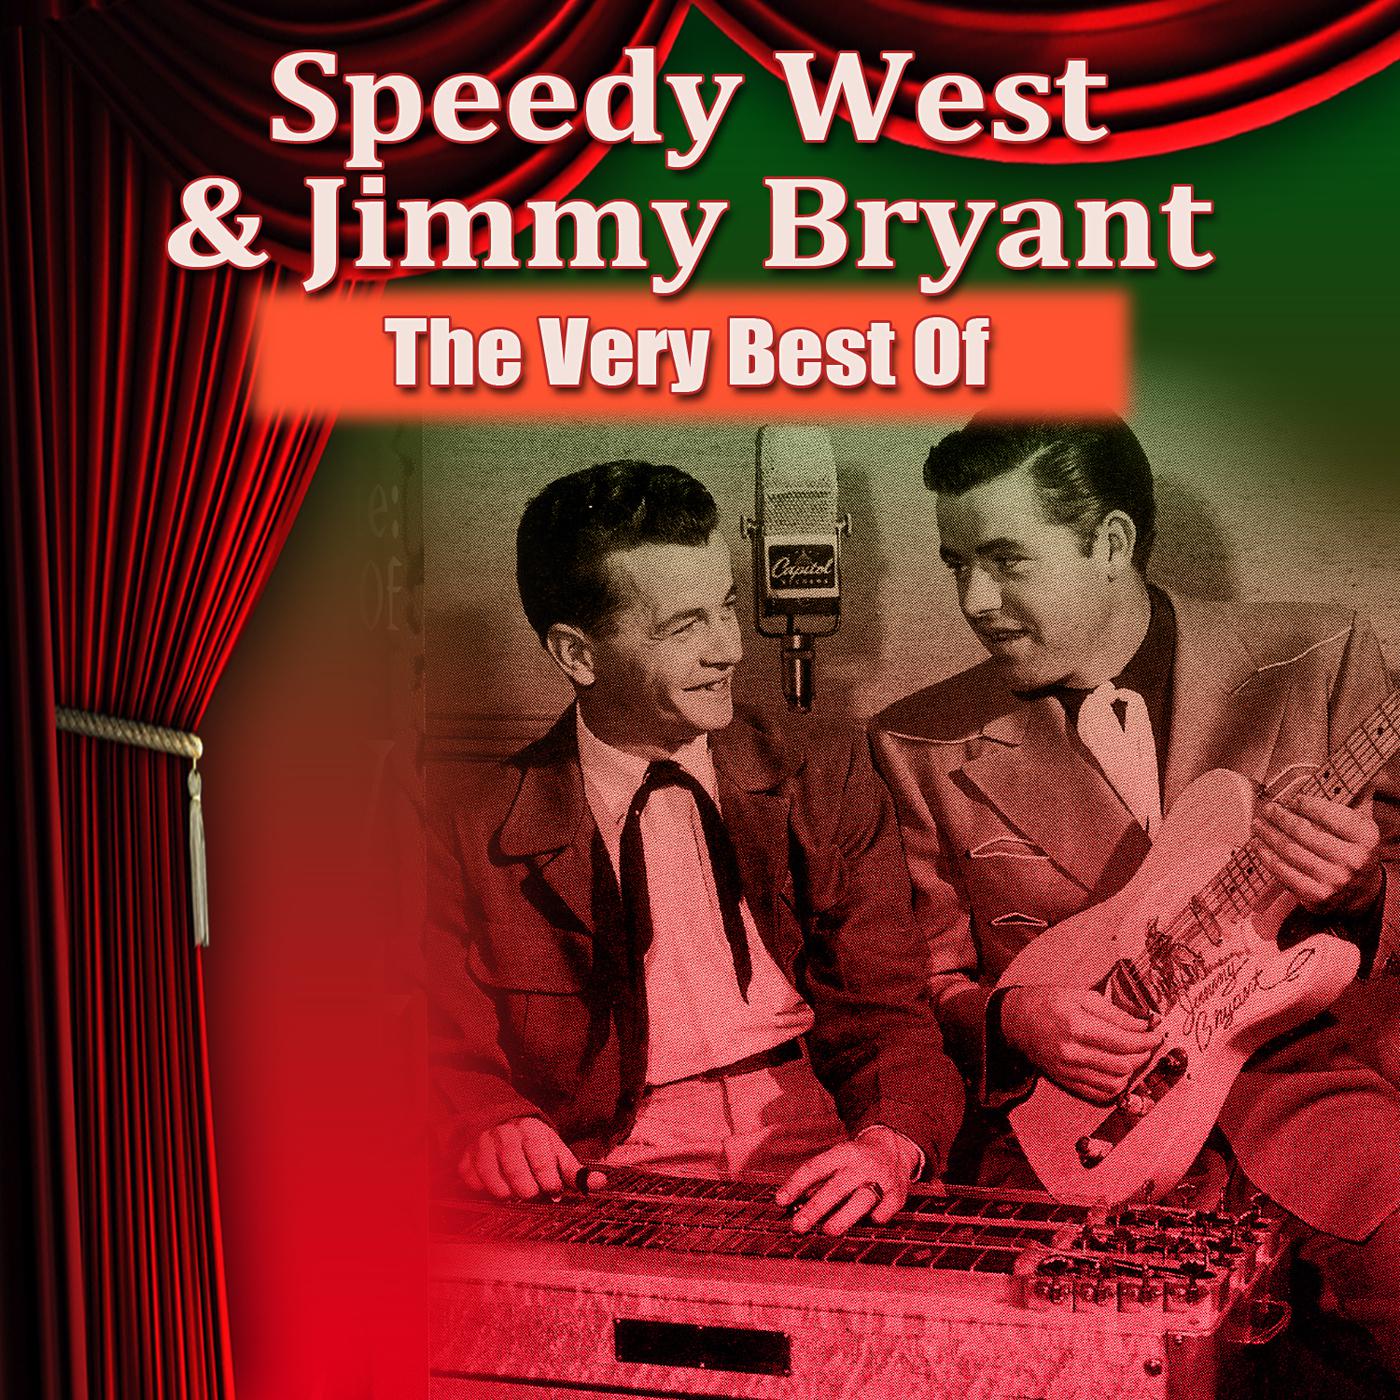 The Very Best Of Speedy West & Jimmy Bryant